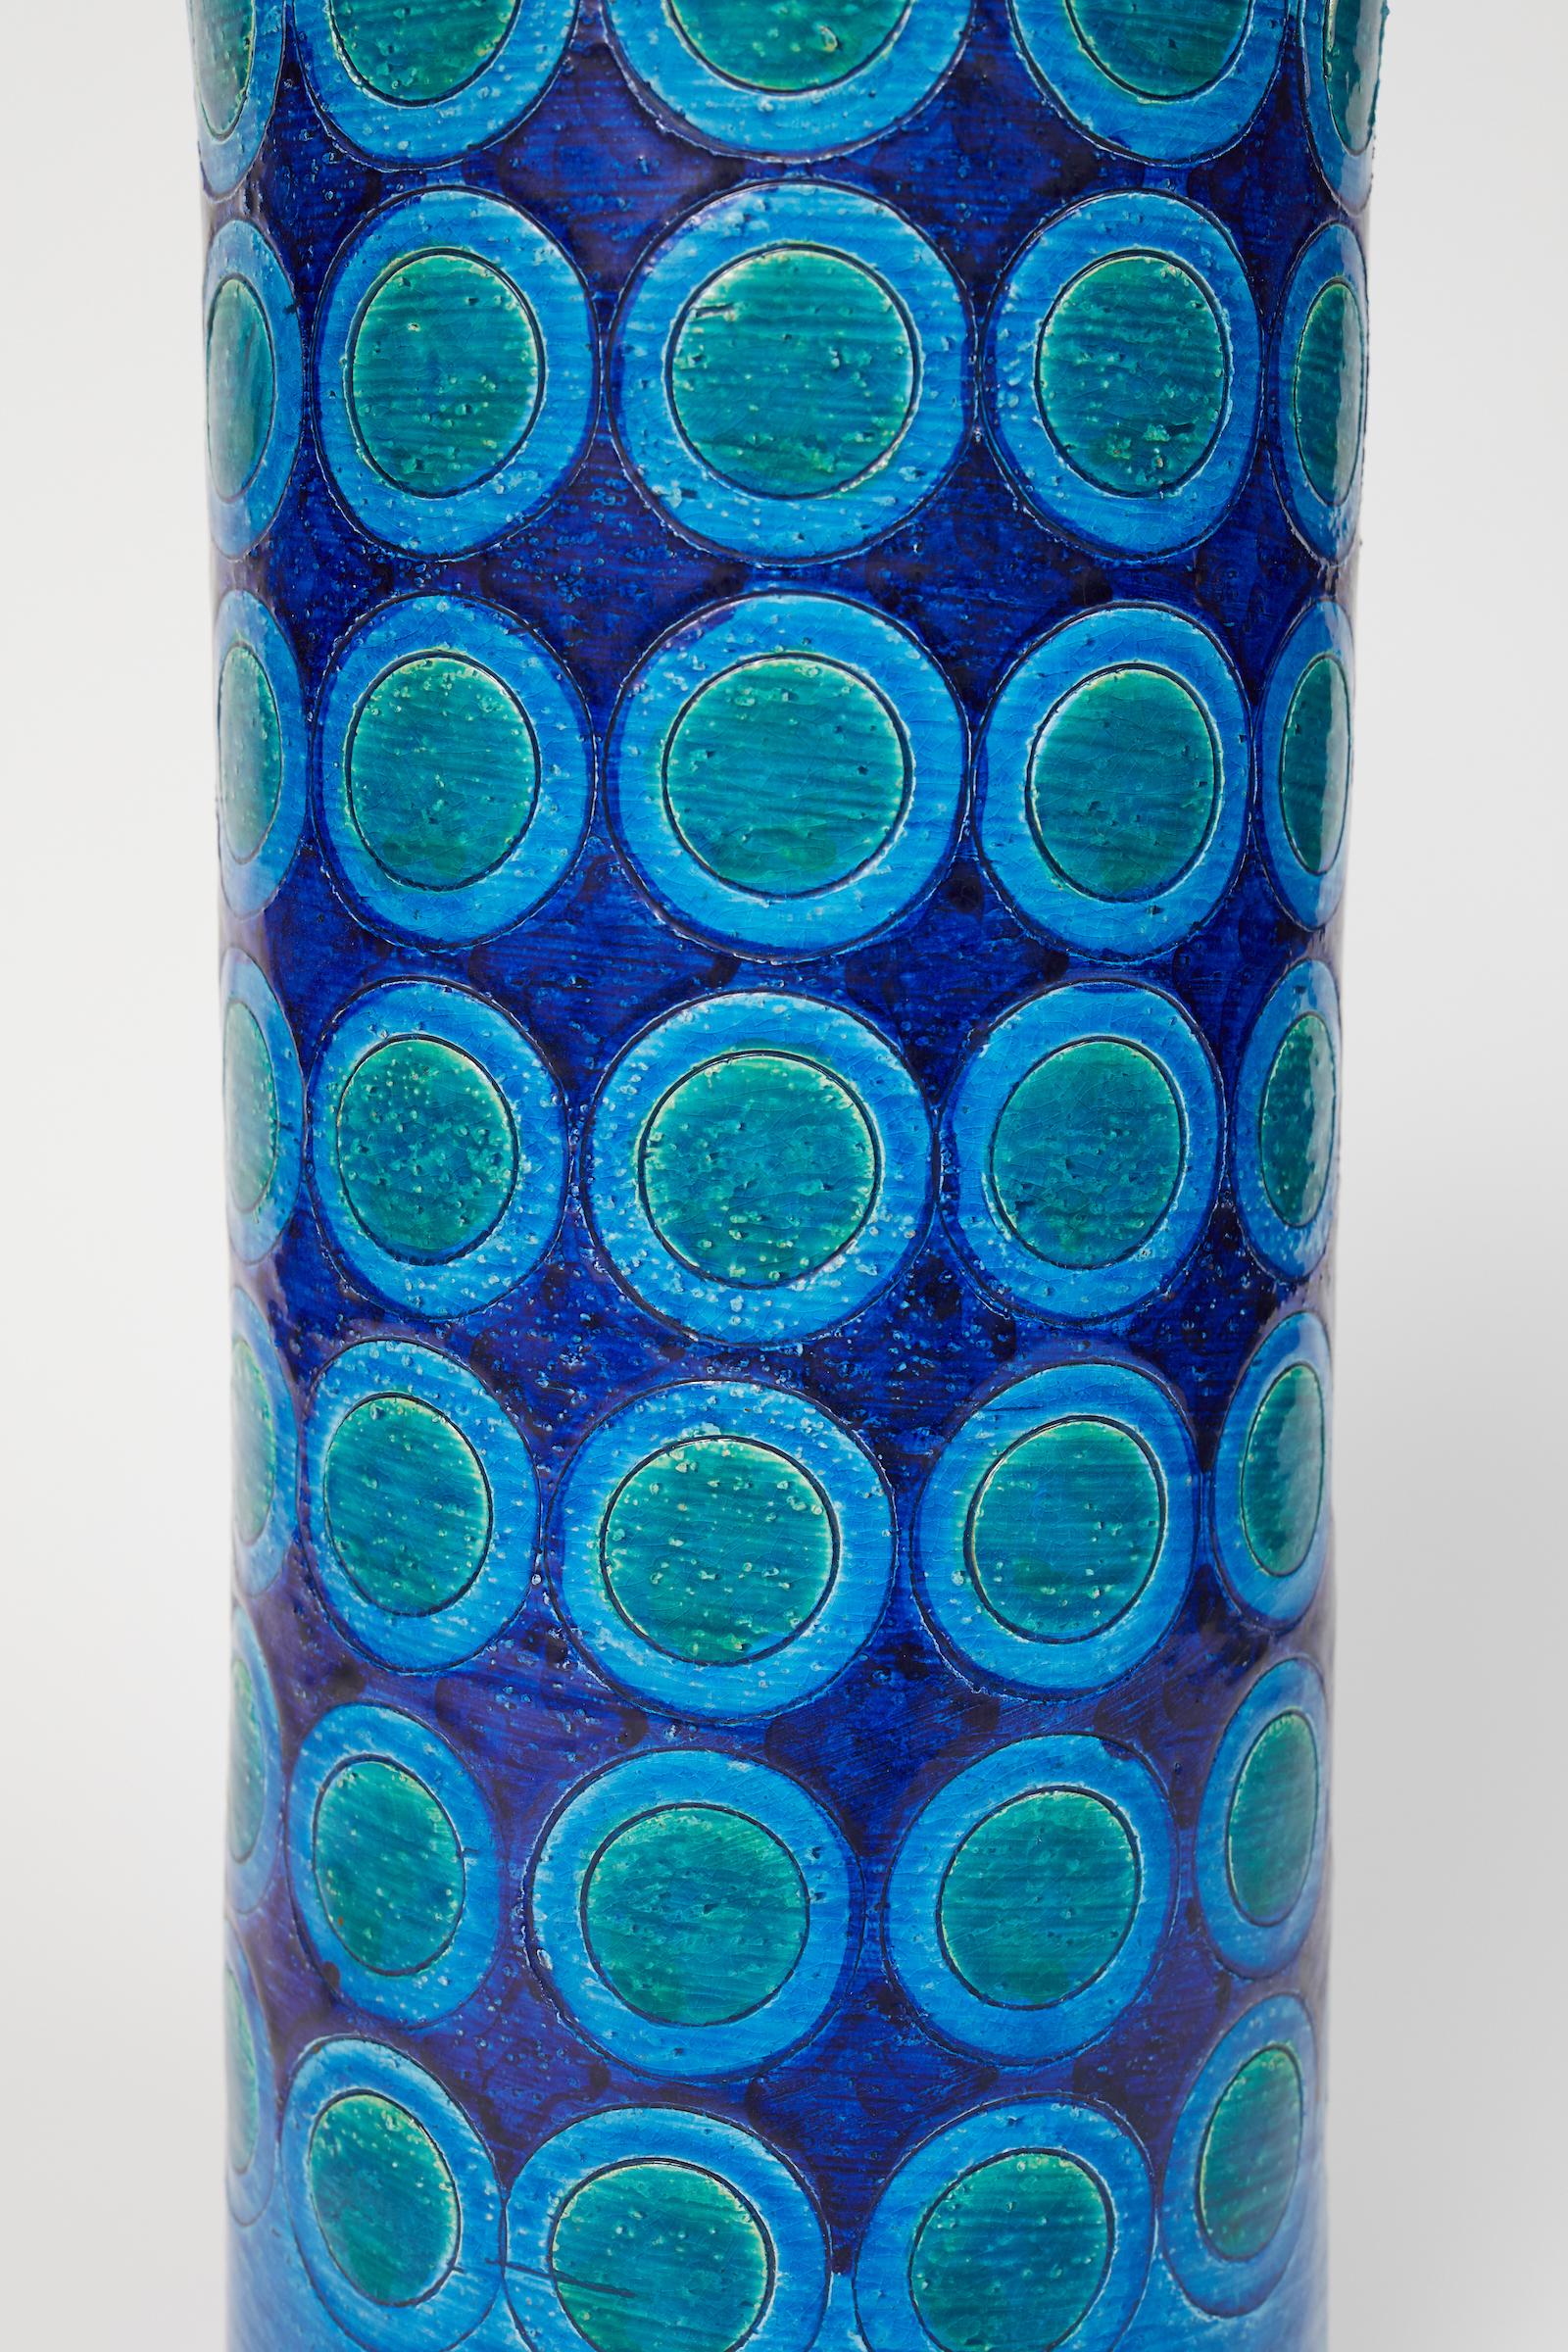 Mid-20th Century Tall Blue and Green Ceramic Glazed Vase by Aldo Londi